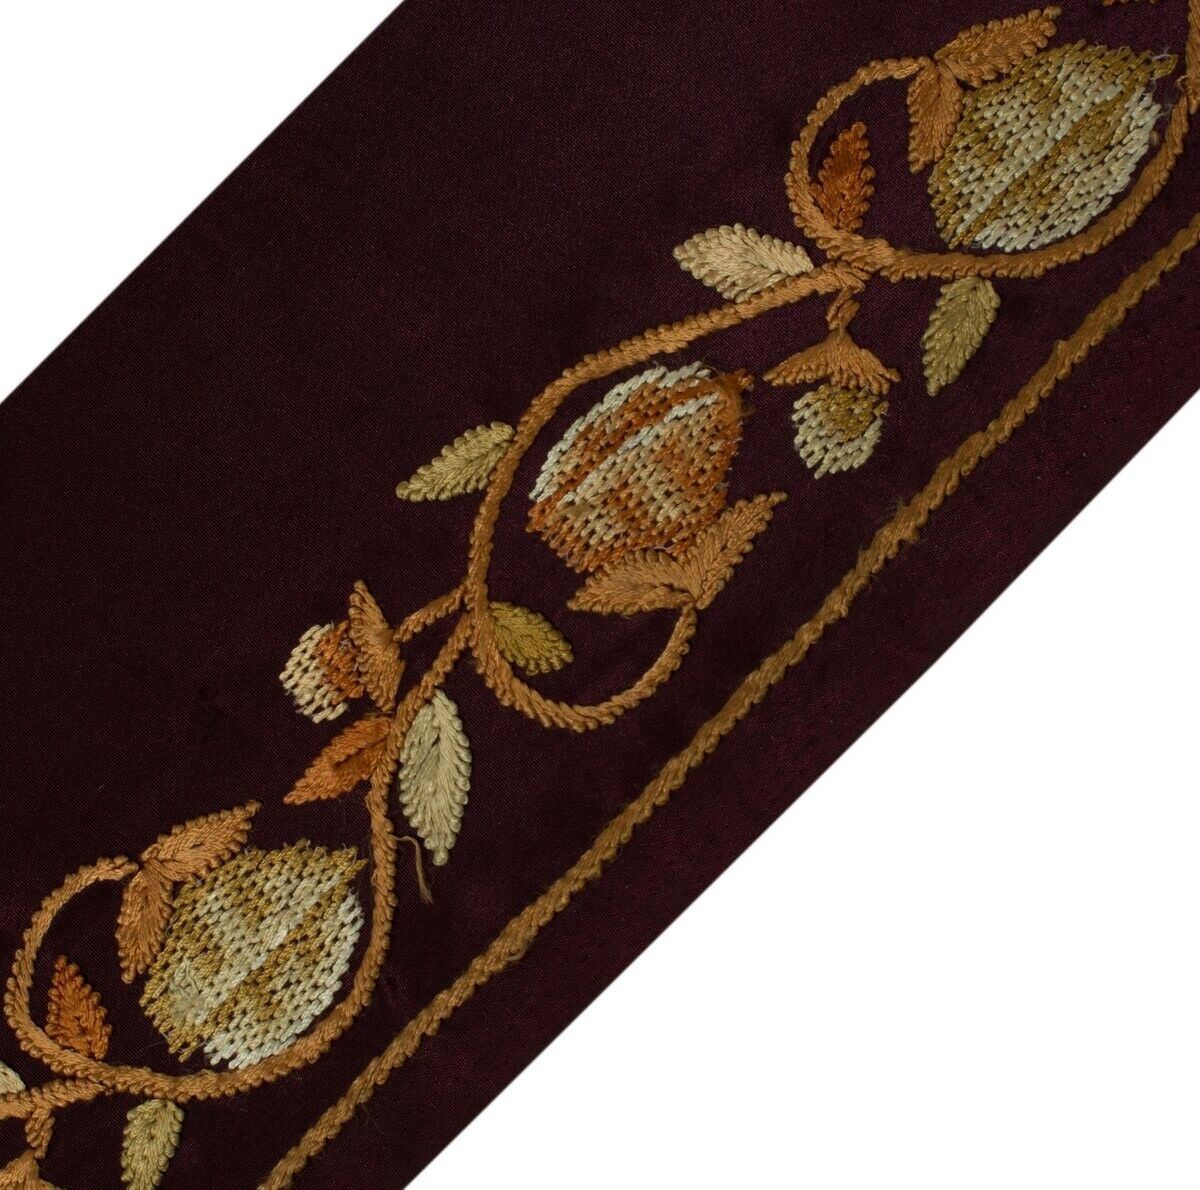 Vintage Sari Border Indian Craft Sewing Trim Hand Embroidered Edging Ribbon Lace